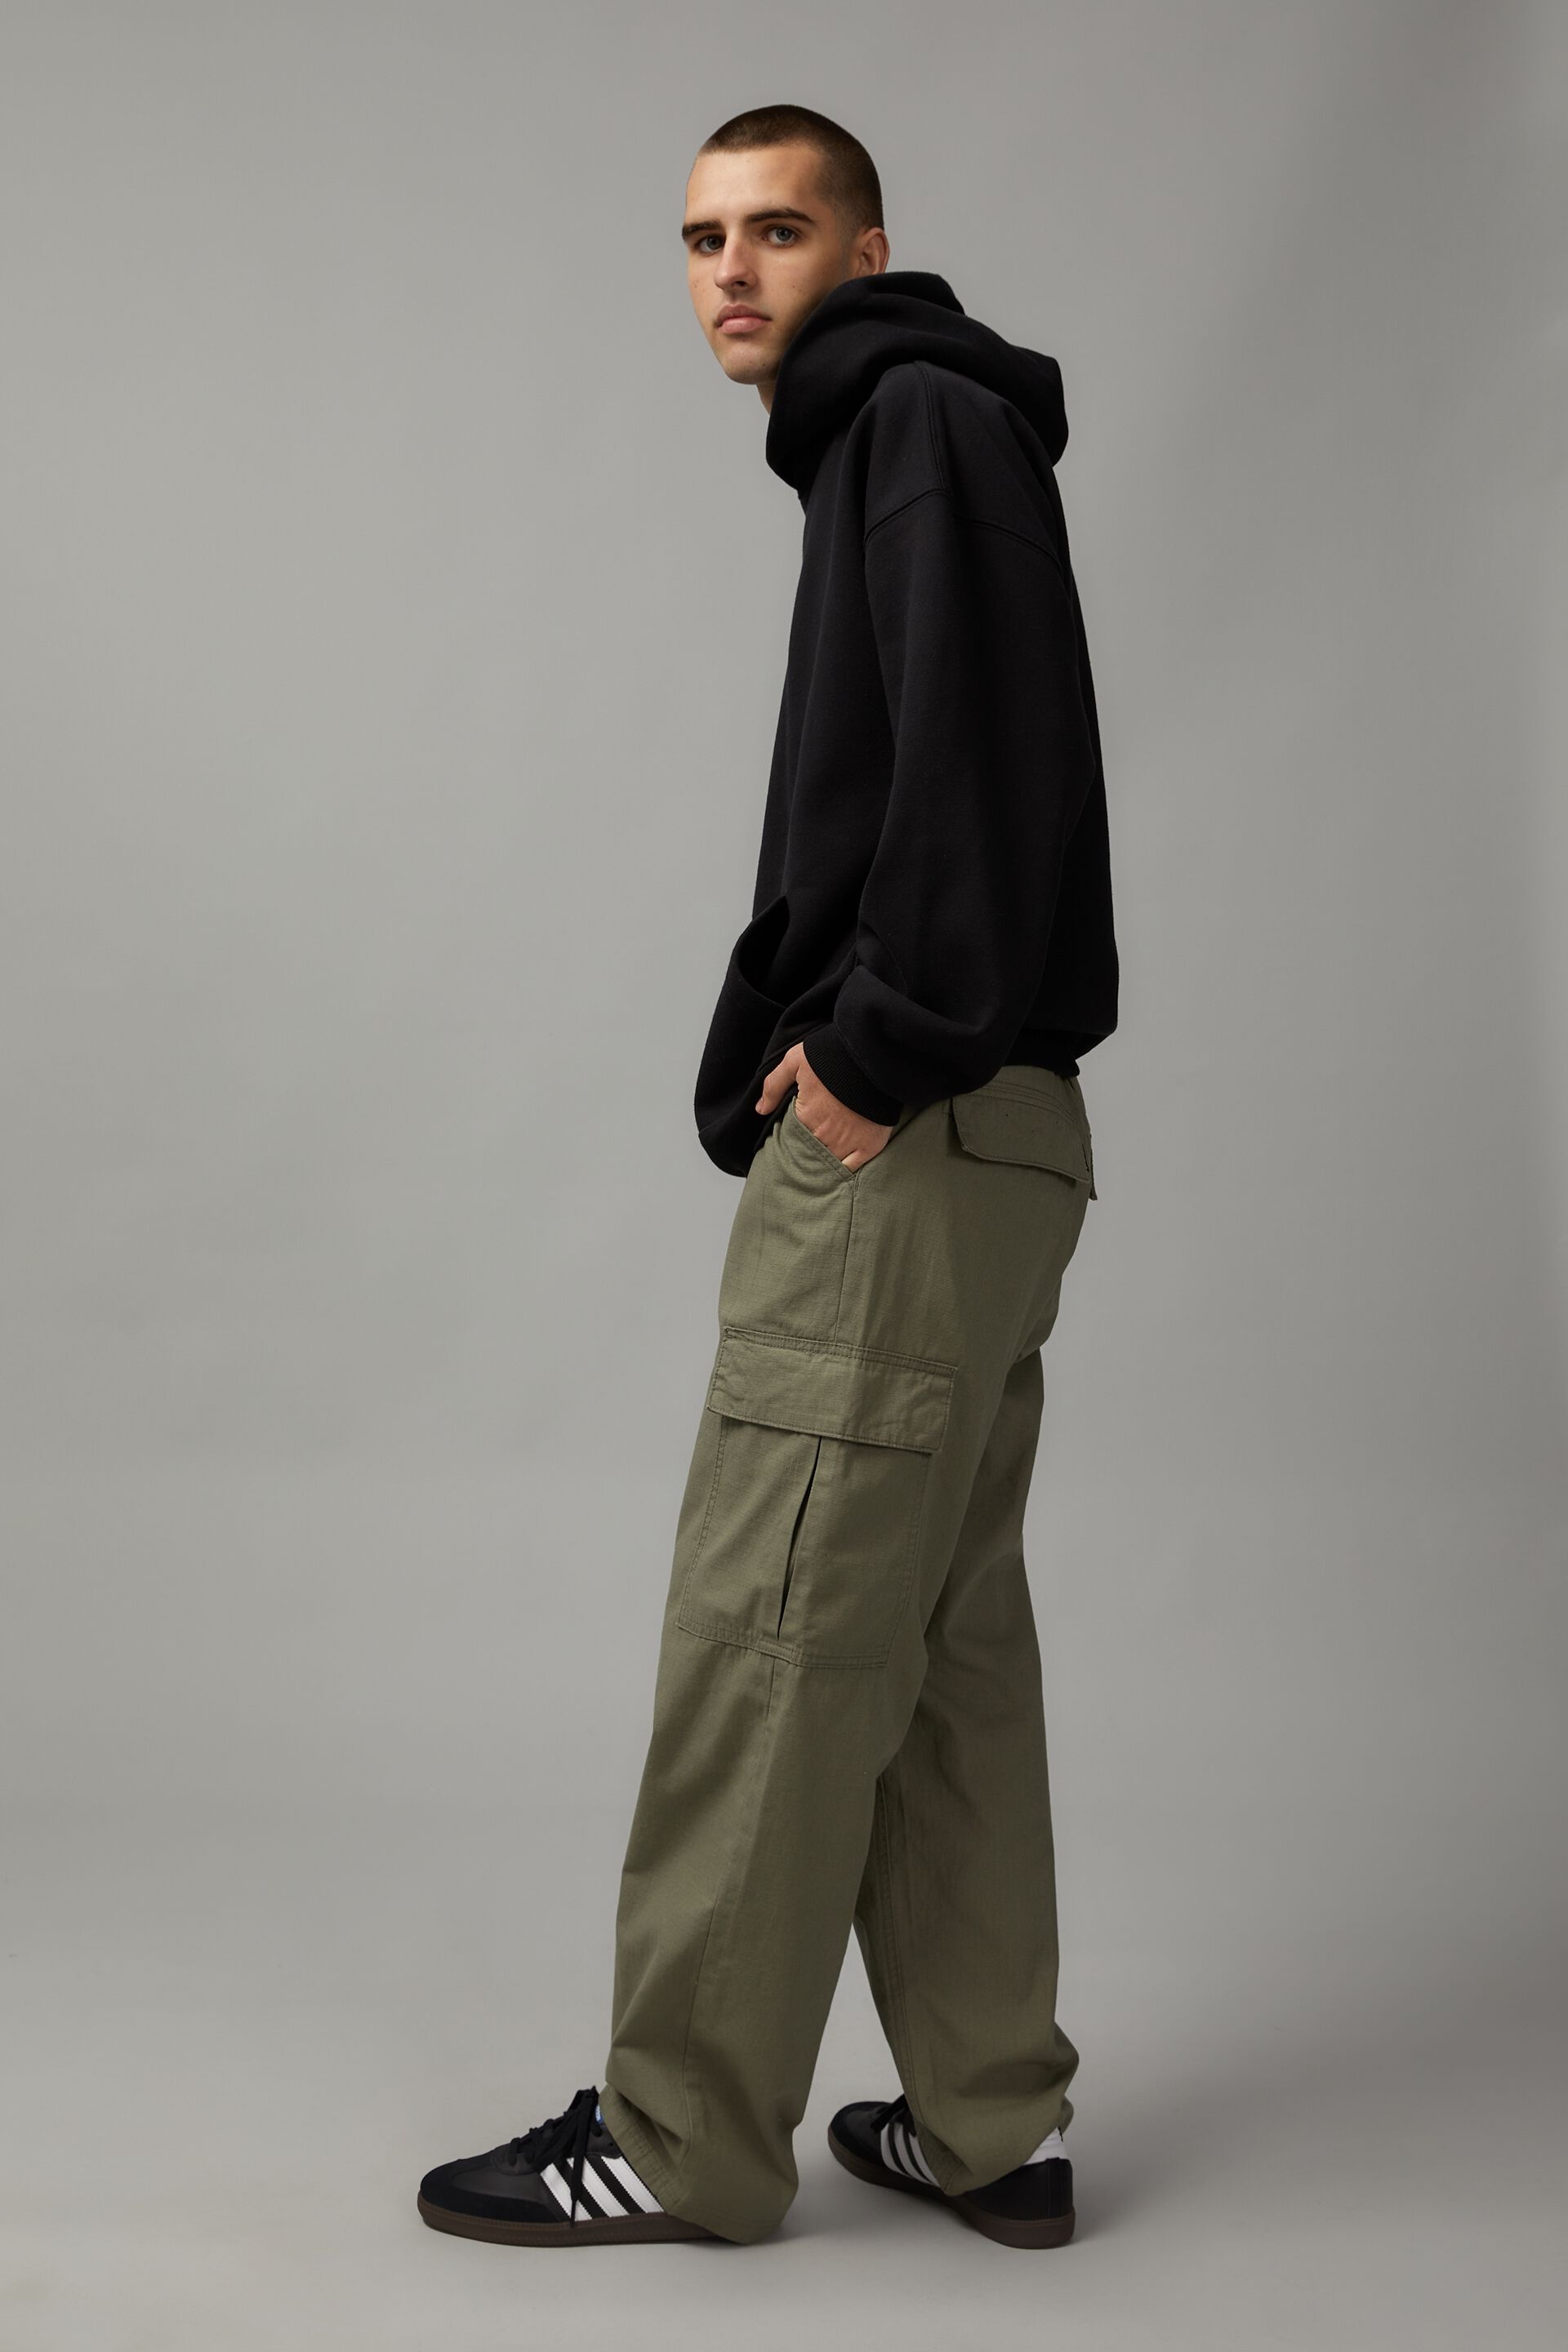 wybzd Women's Adjustable Drawstring Elastic Waist Baggy Cargo Pants  Multi-Pocket Jogging Trousers Khaki S - Walmart.com